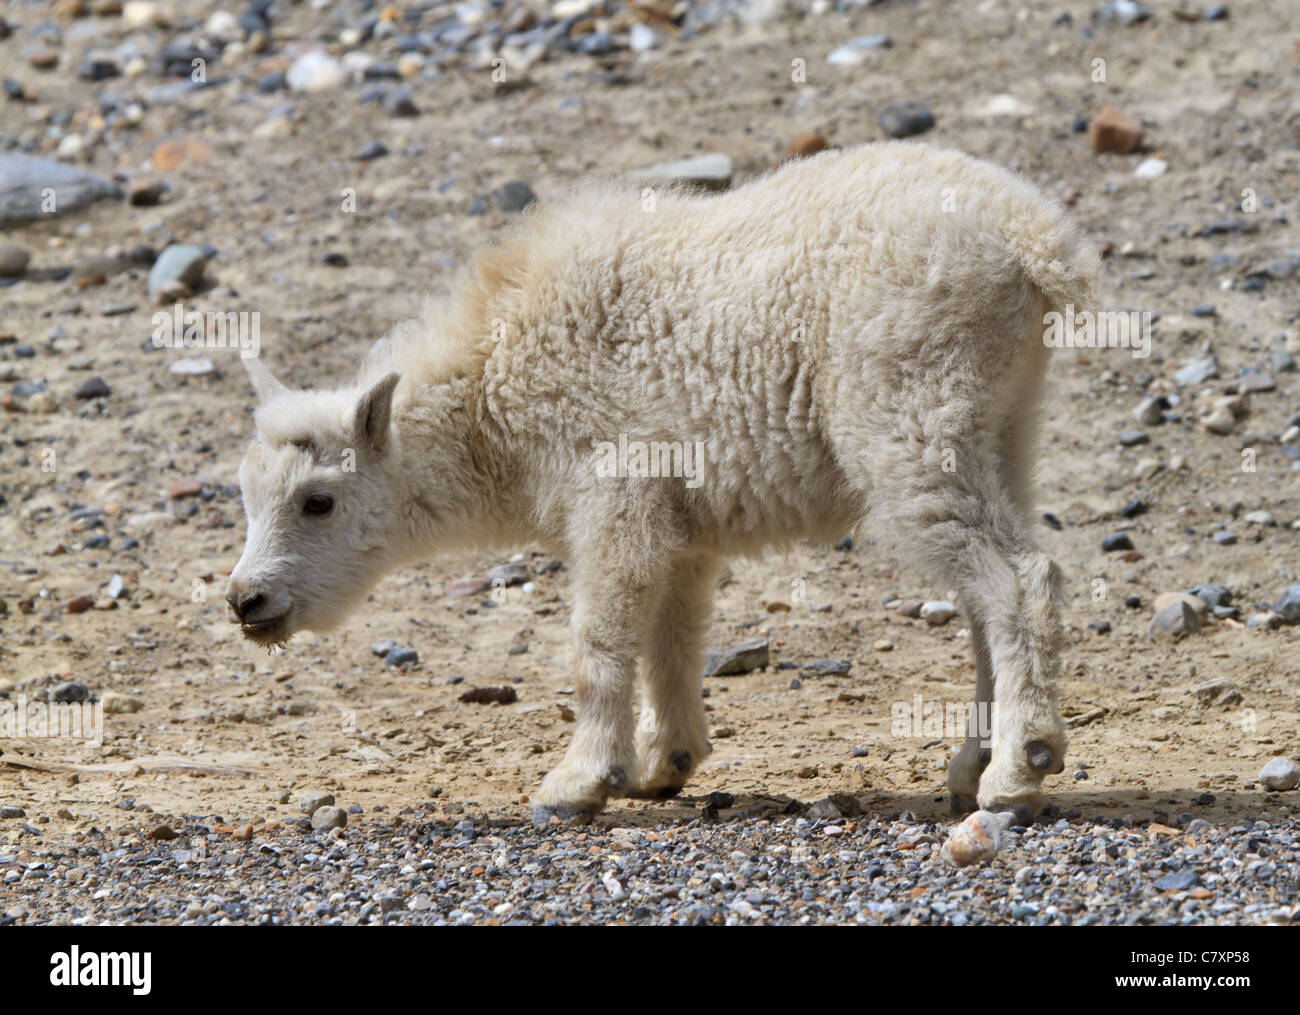 Montaña, cabrito Oreamnos americanus, Kootenay National Park, Columbia Británica. Grandes mamíferos ungulados, no una verdadera cabra (Capra). Foto de stock